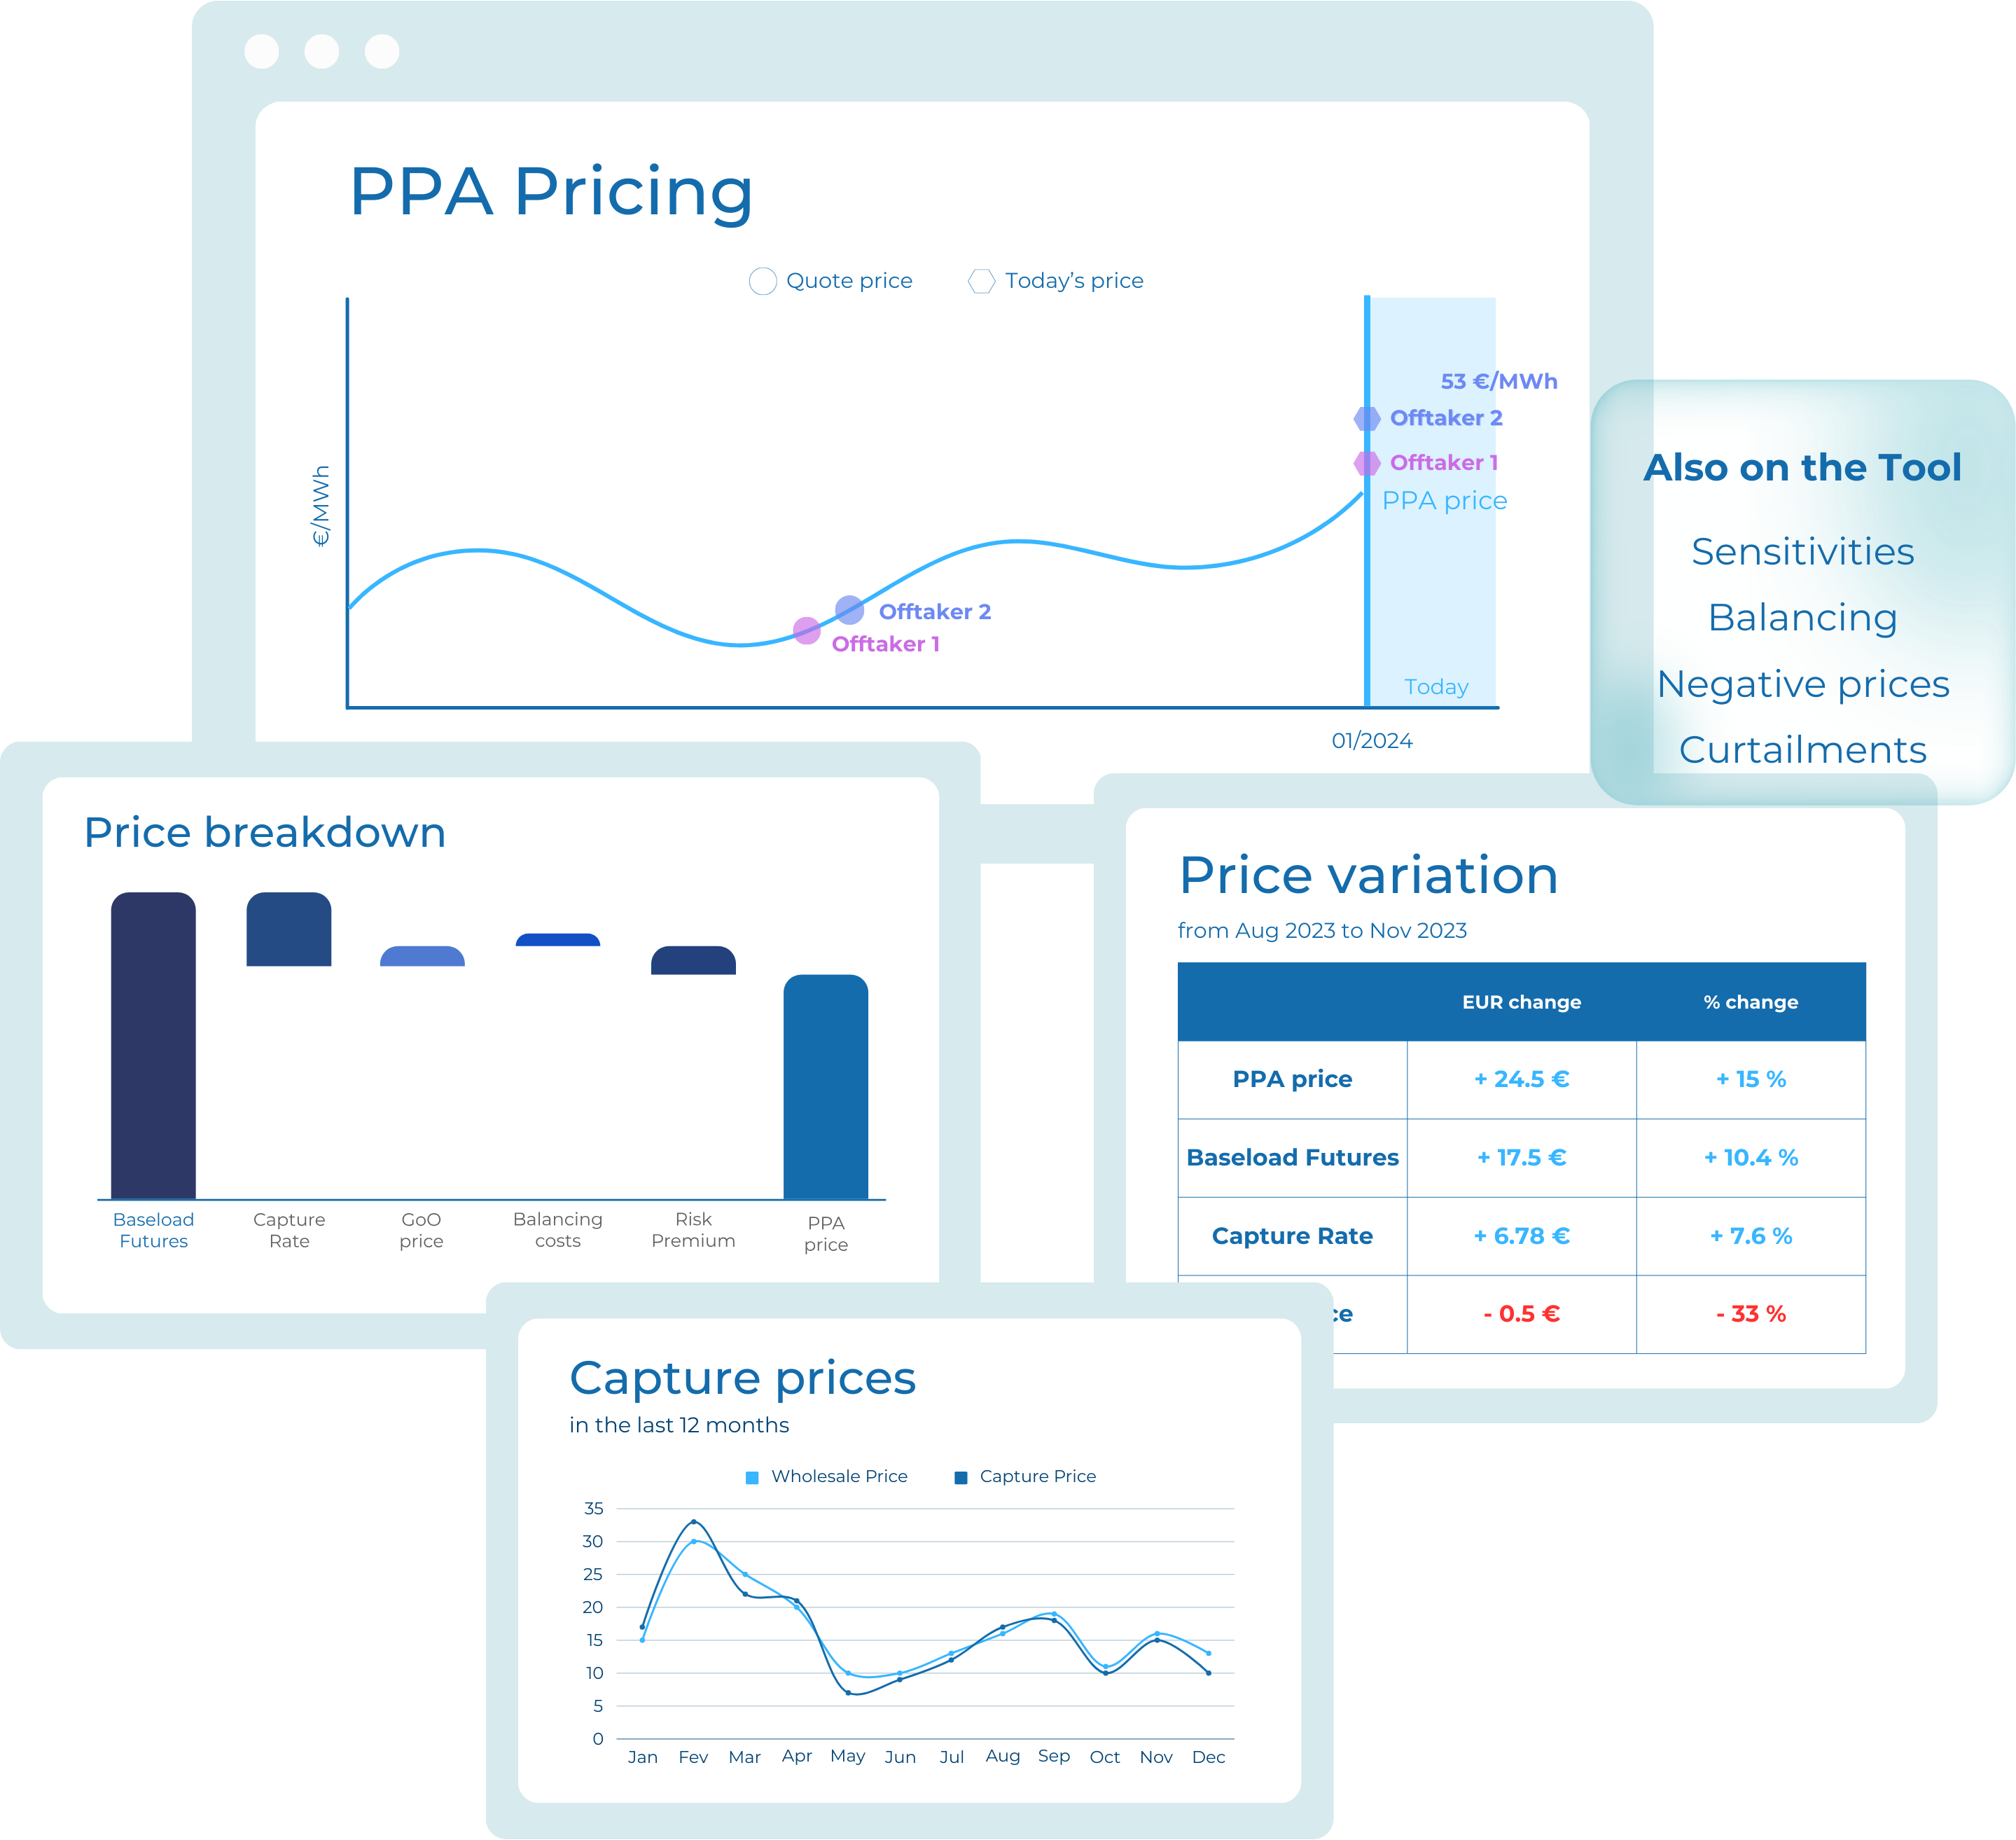 synertics tools power prices ppa pricing price variation capture prices price breakdown